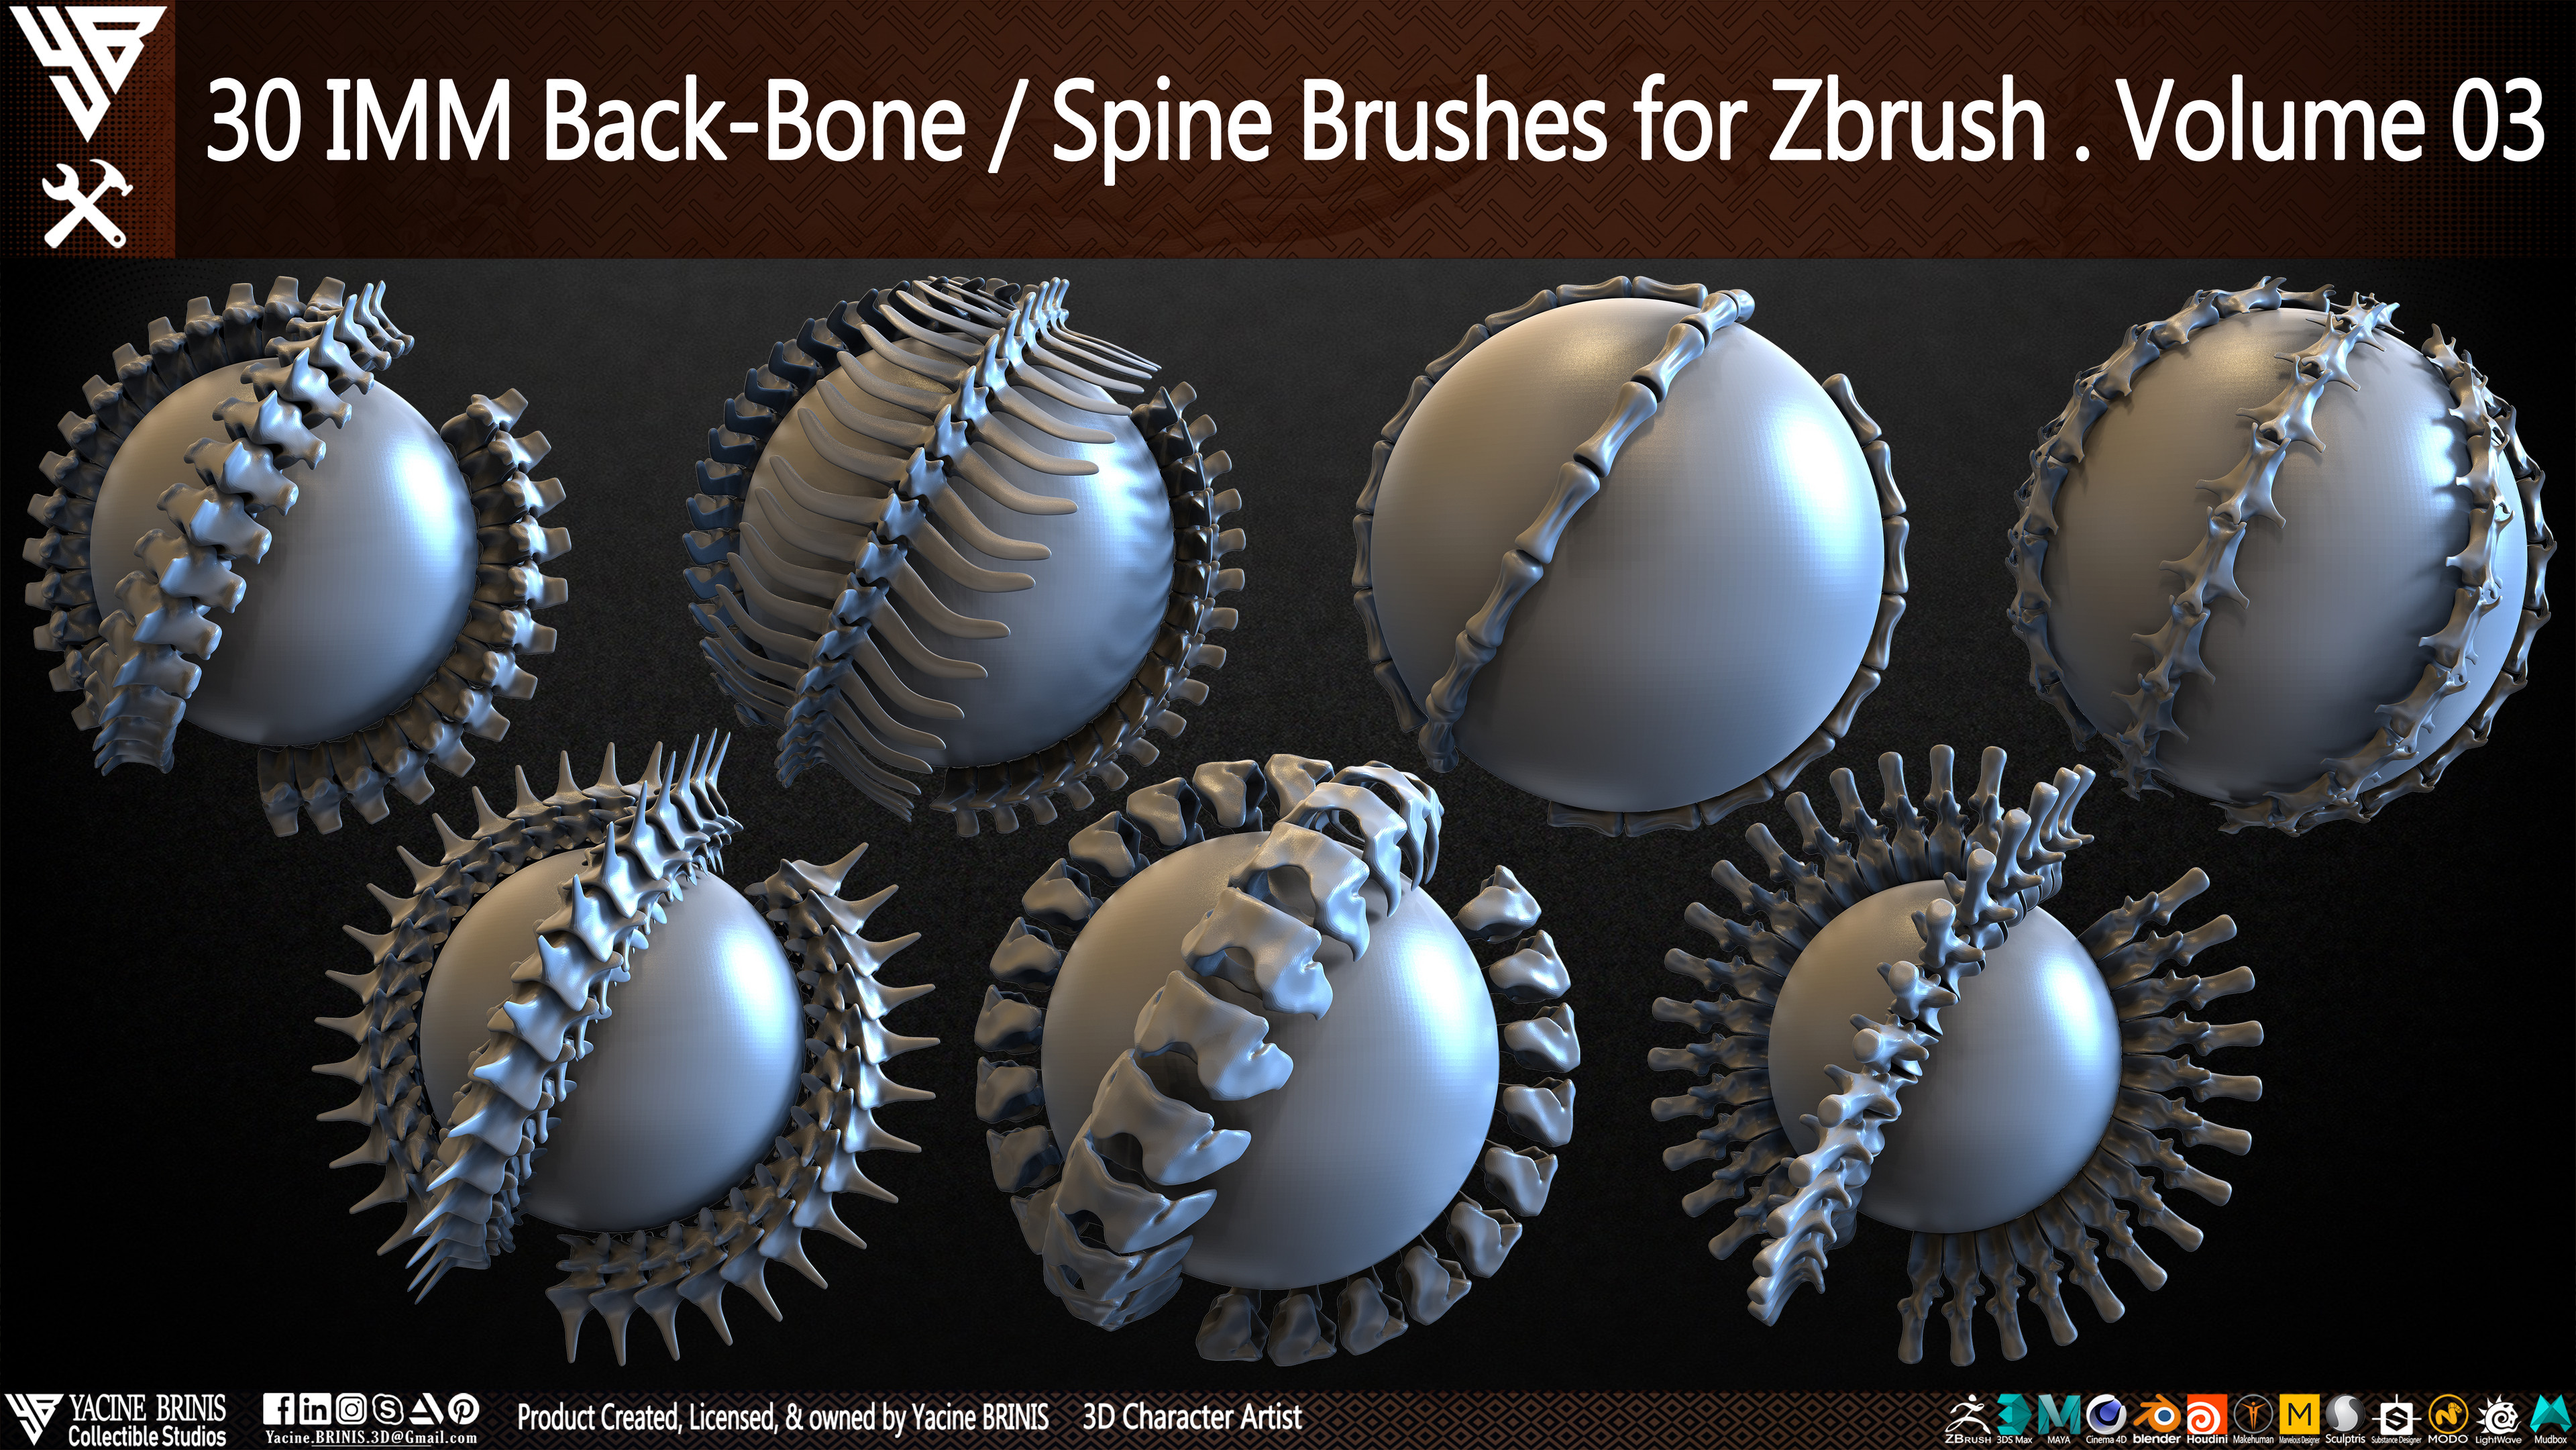 30 IMM Back-Bone - Spine Brushes for Zbrush Volume 03 Sculpted by Yacine BRINIS Set 001